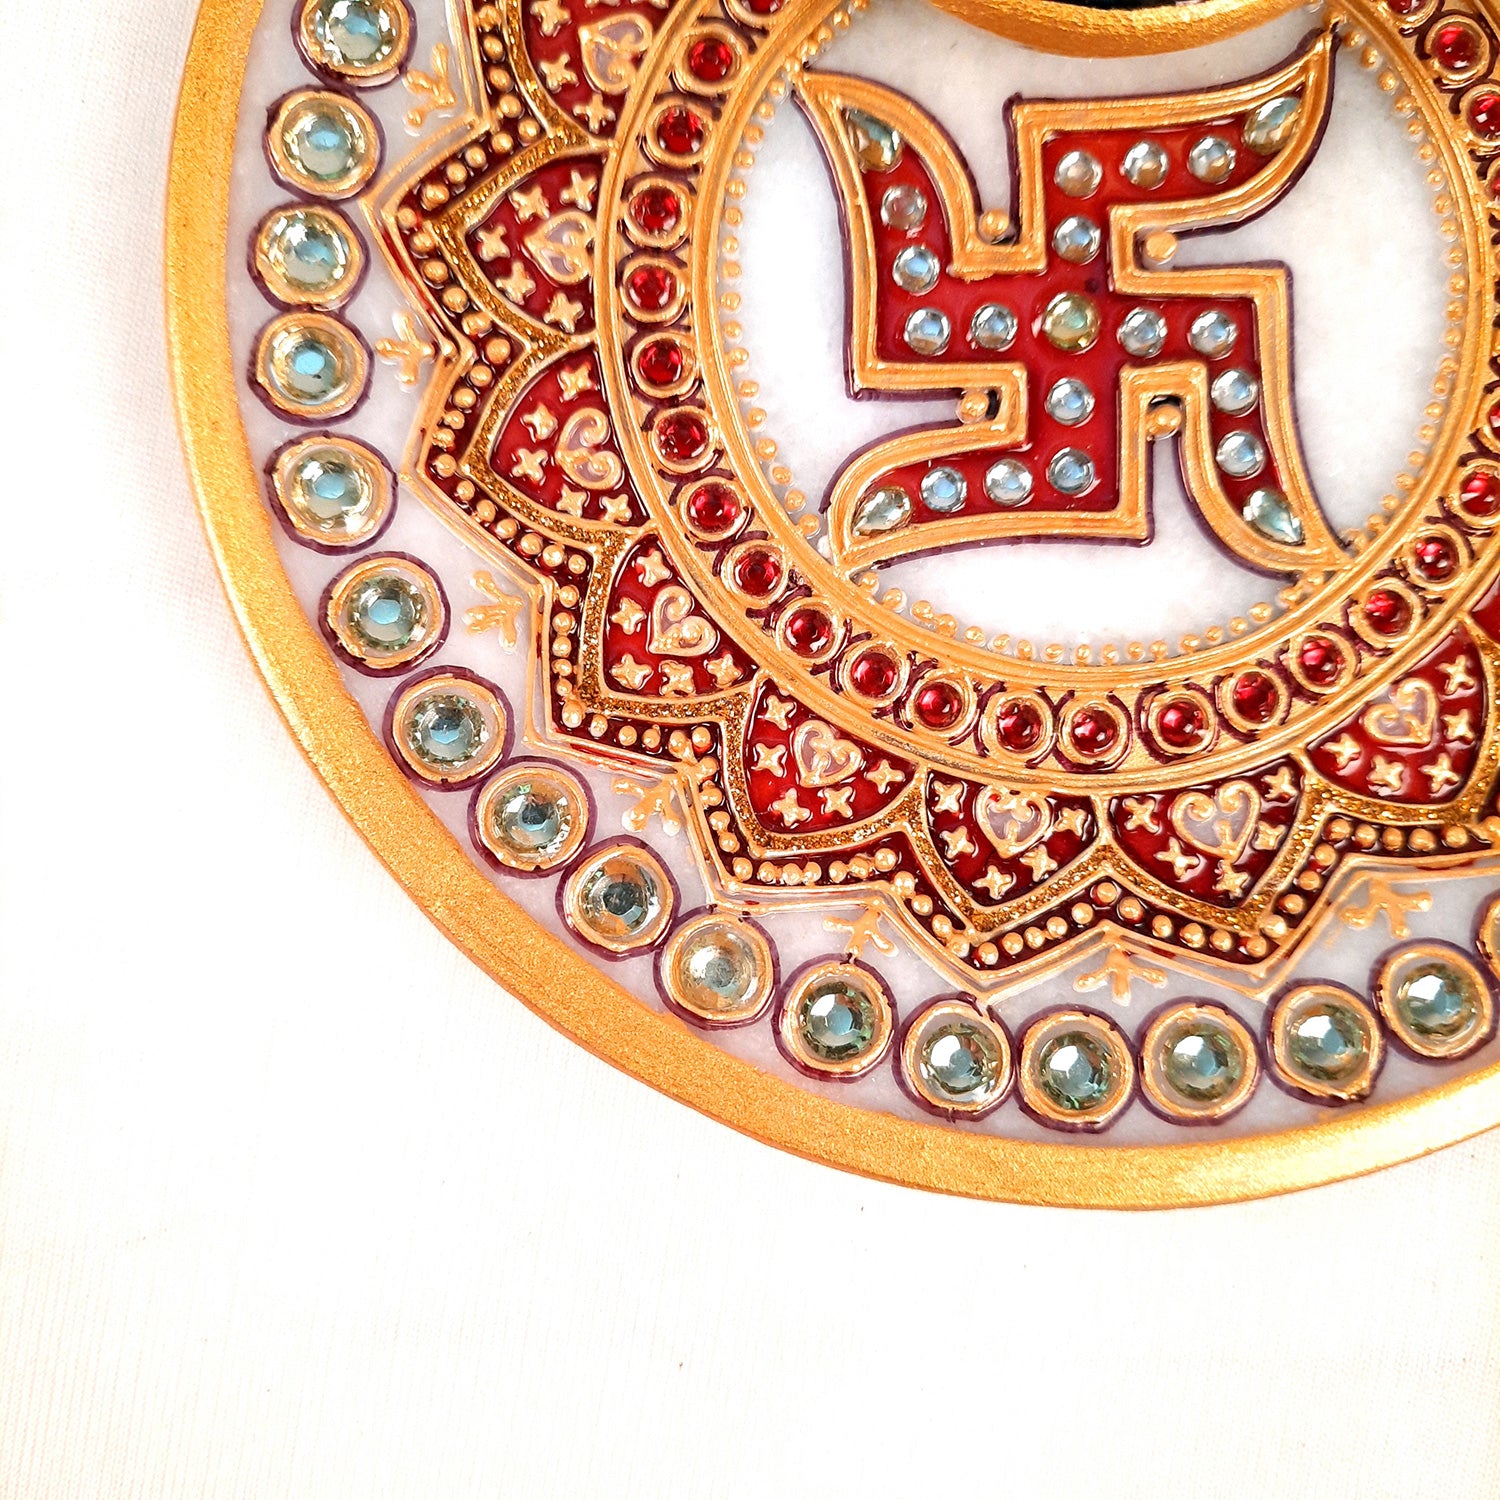 Marble Puja Thali with Diya | Pooja Plate With Swastik Design - For Rakhi, Diwali & Karwa Chauth - 6 Inch - Apkamart